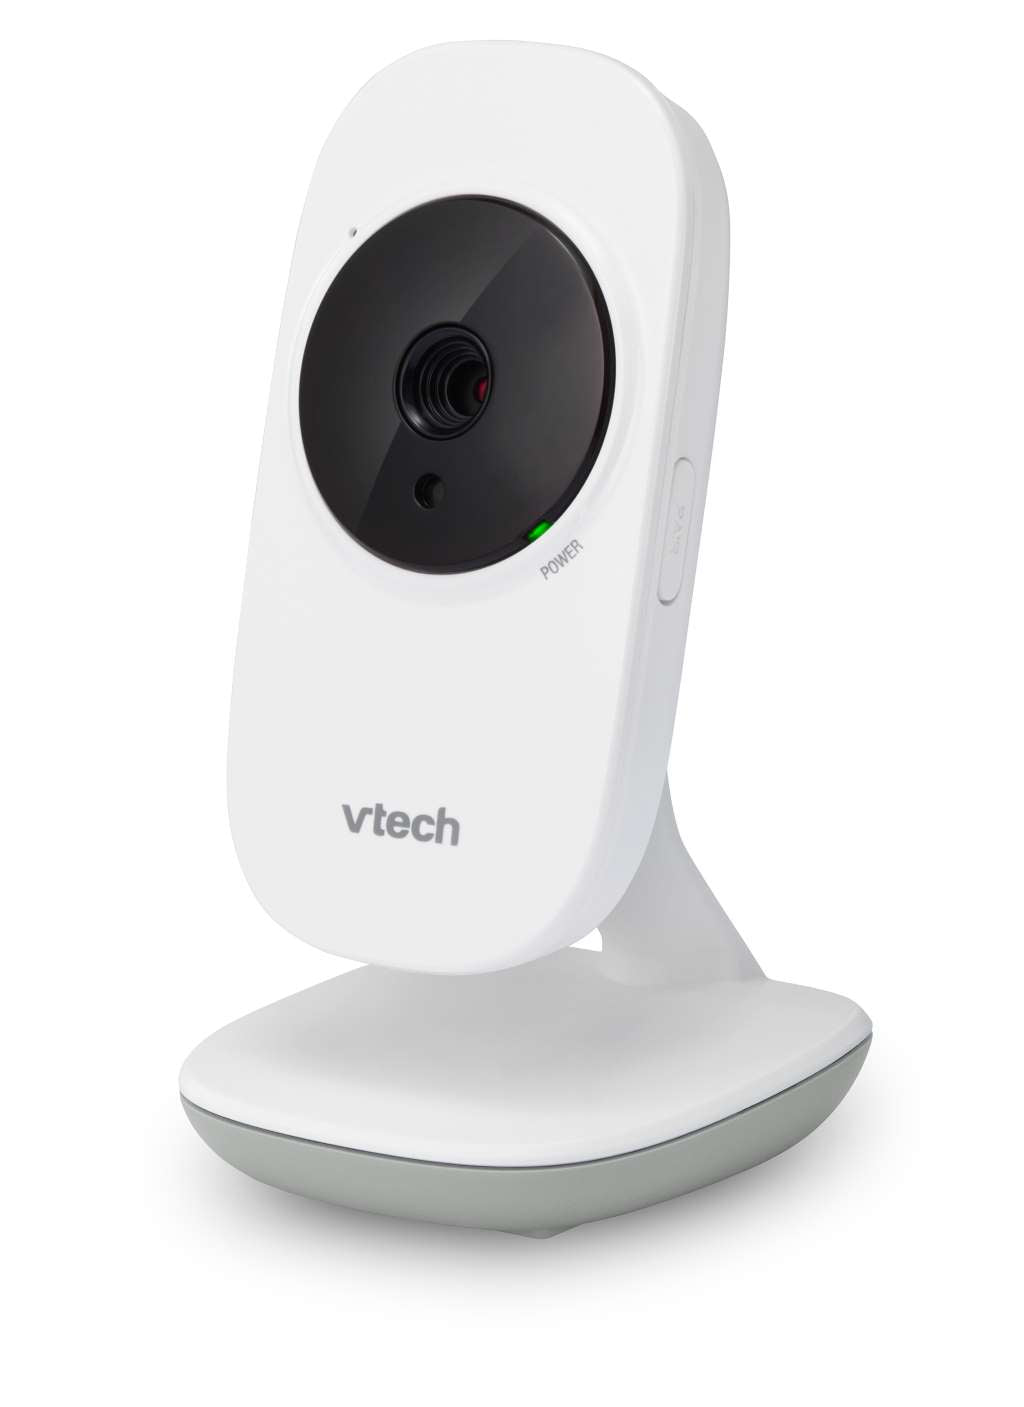 VTech VM819 Review